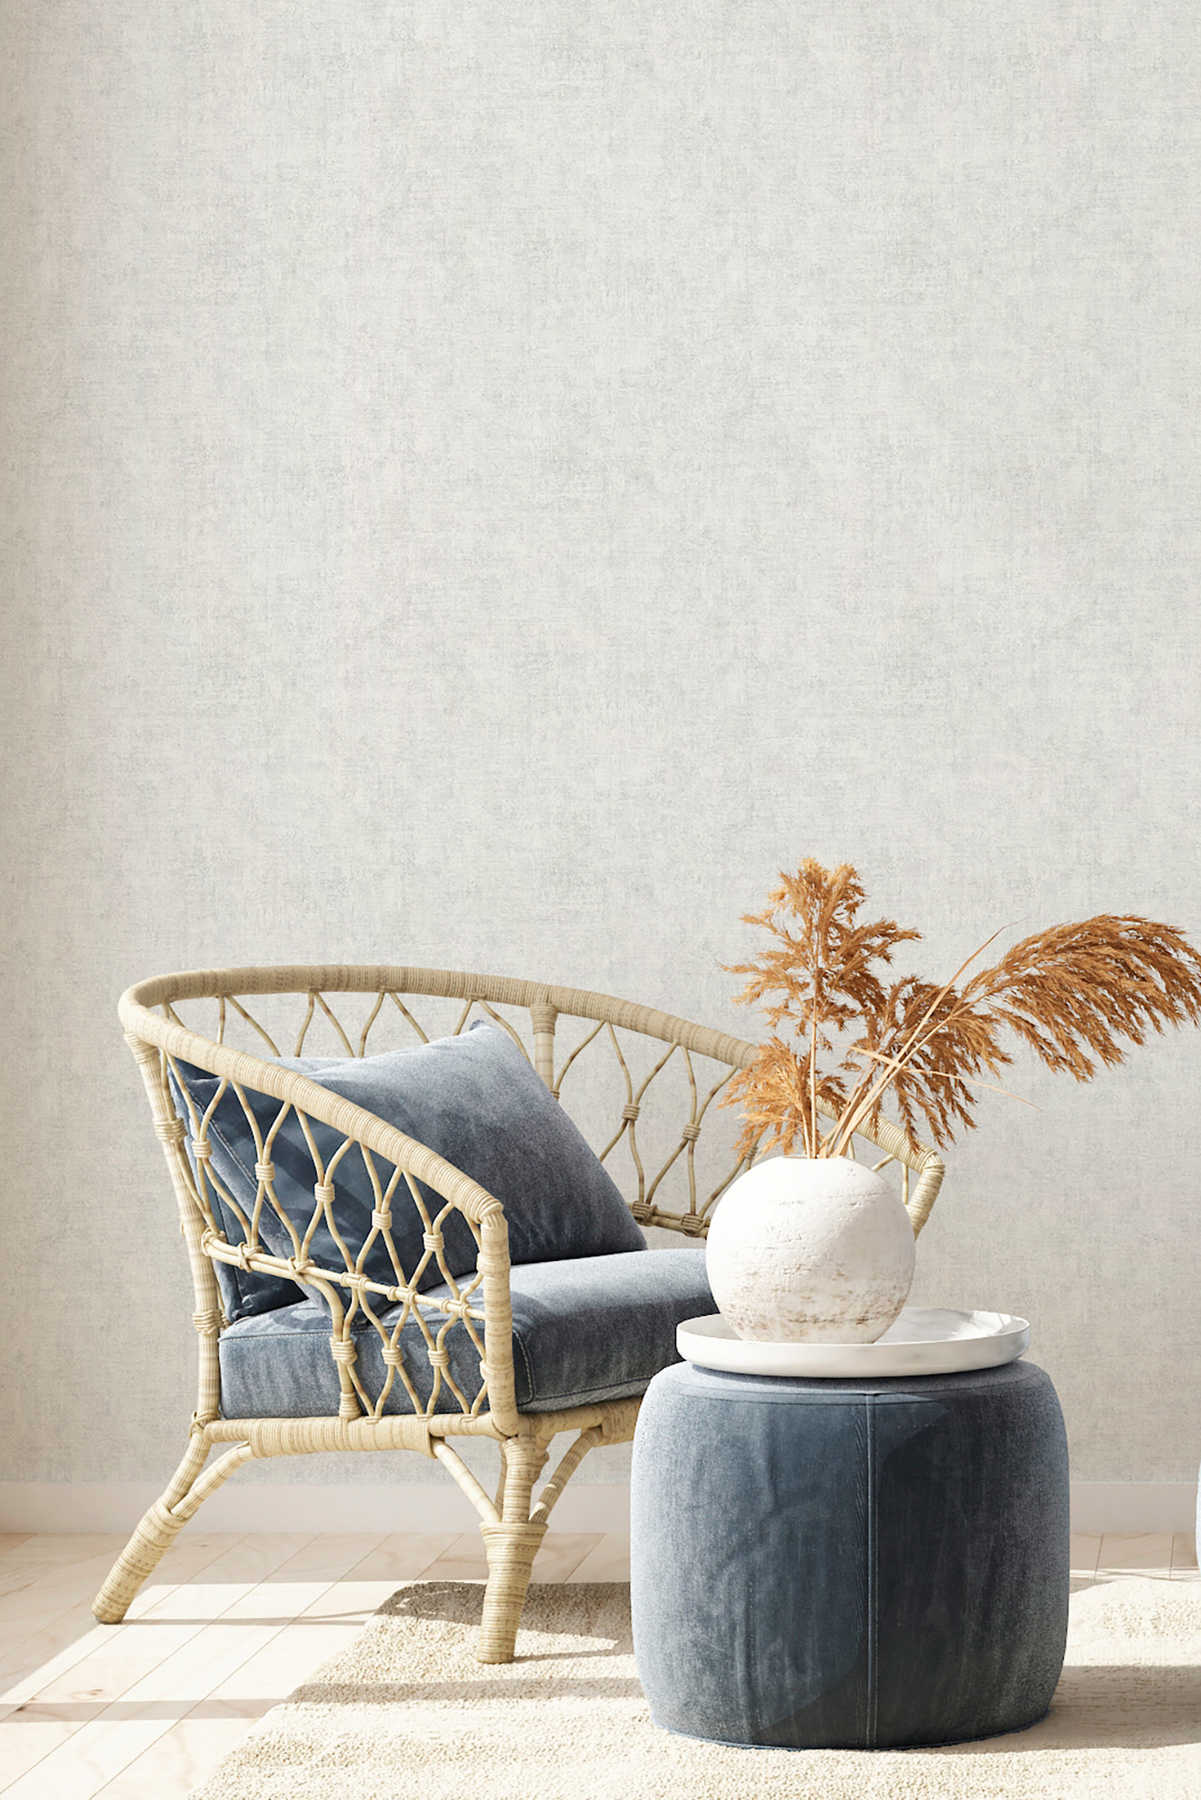             Non-woven wallpaper plain, mottled, textured pattern - grey
        